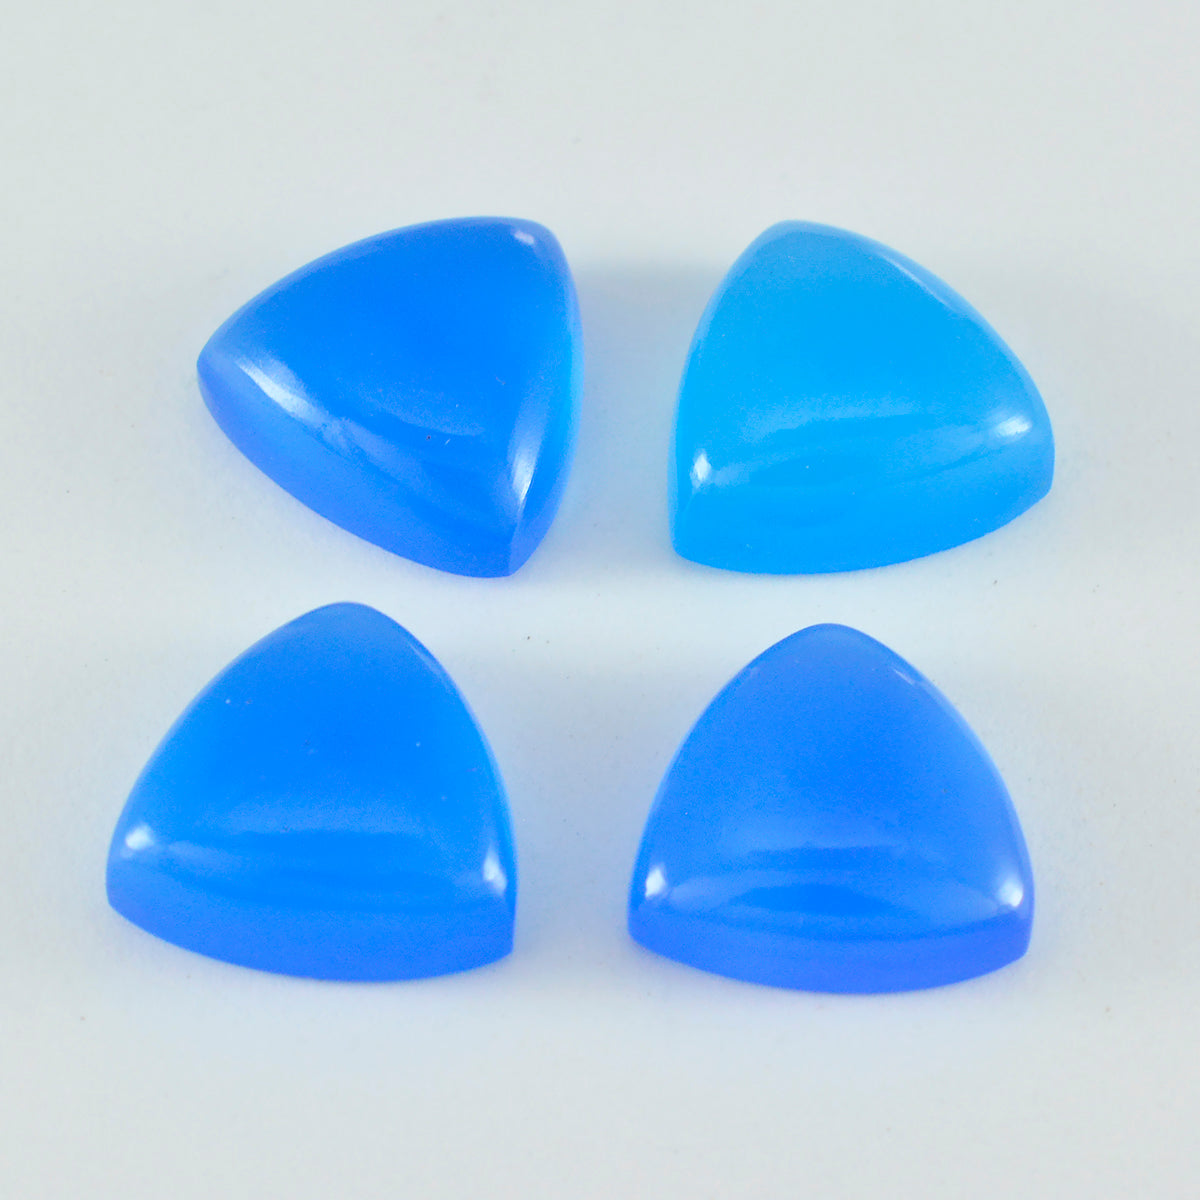 riyogems 1st blå kalcedon cabochon 10x10 mm biljoner form en kvalitetspärla